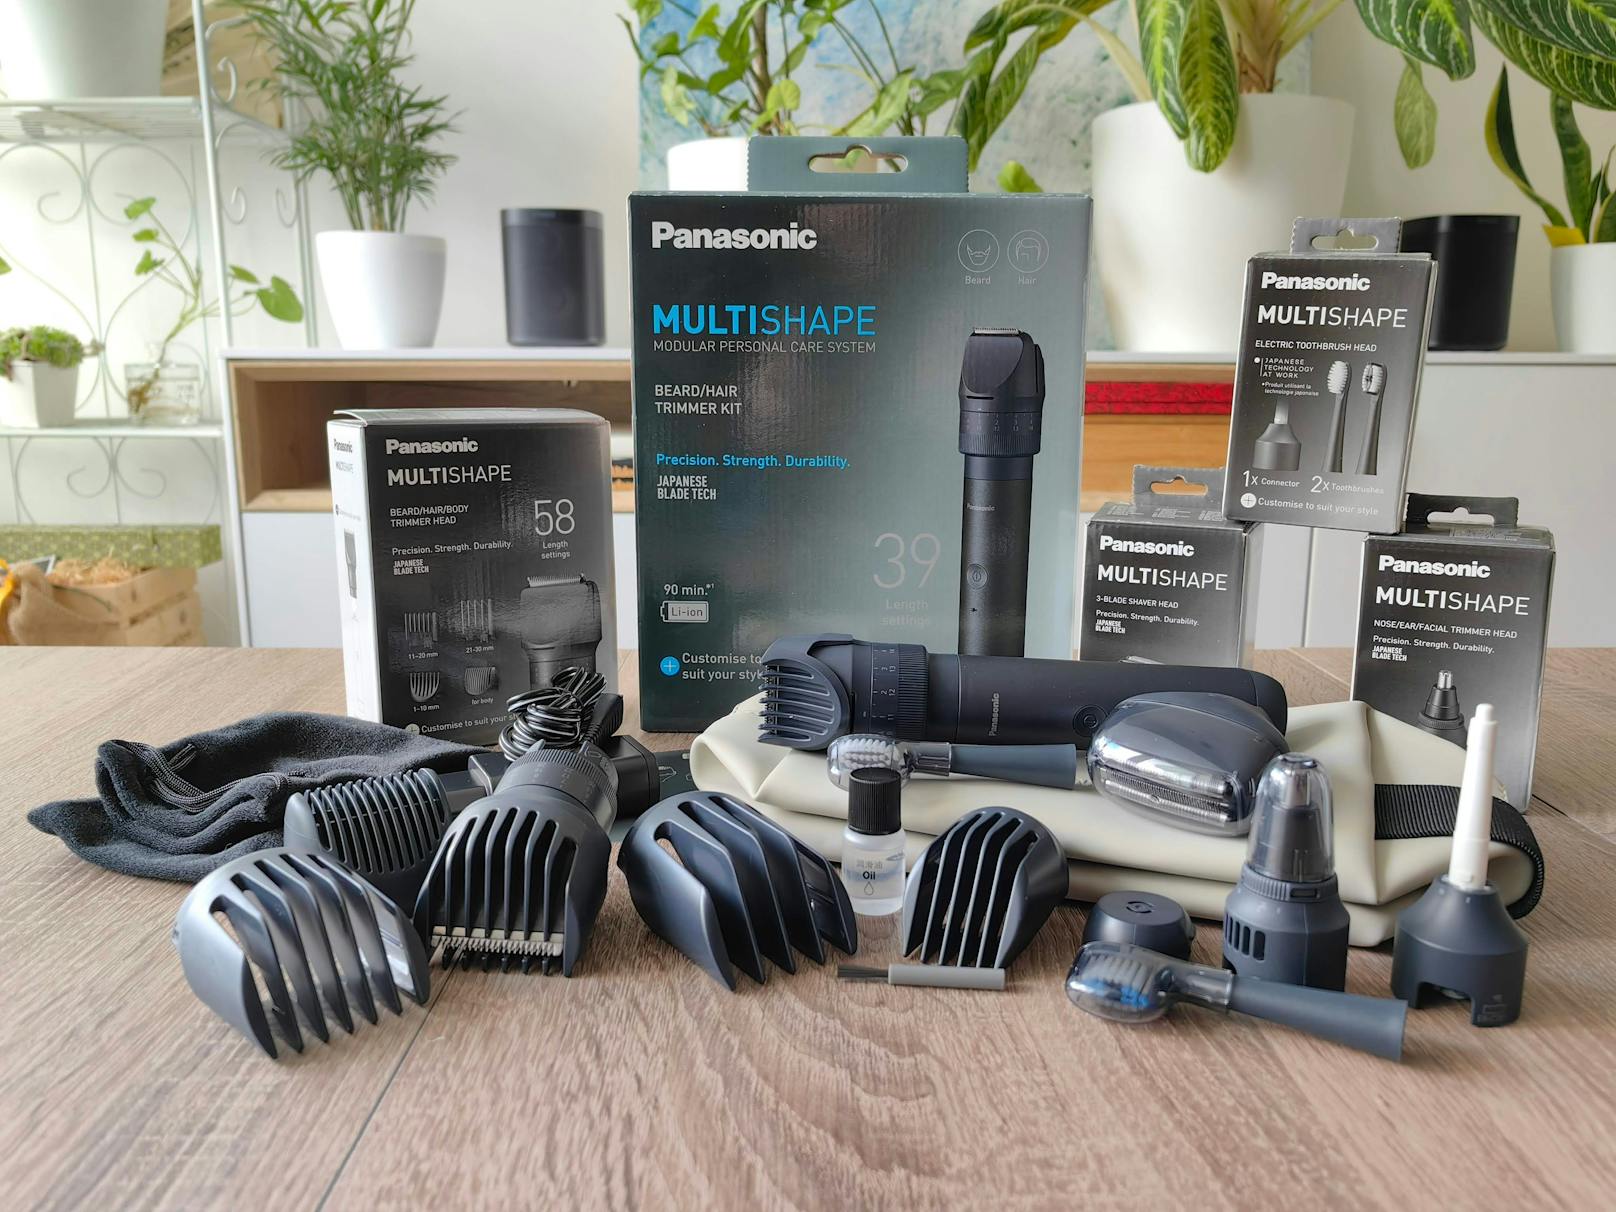 Panasonic und Multimedia der Multishape Rasierer Zahnbürste – –